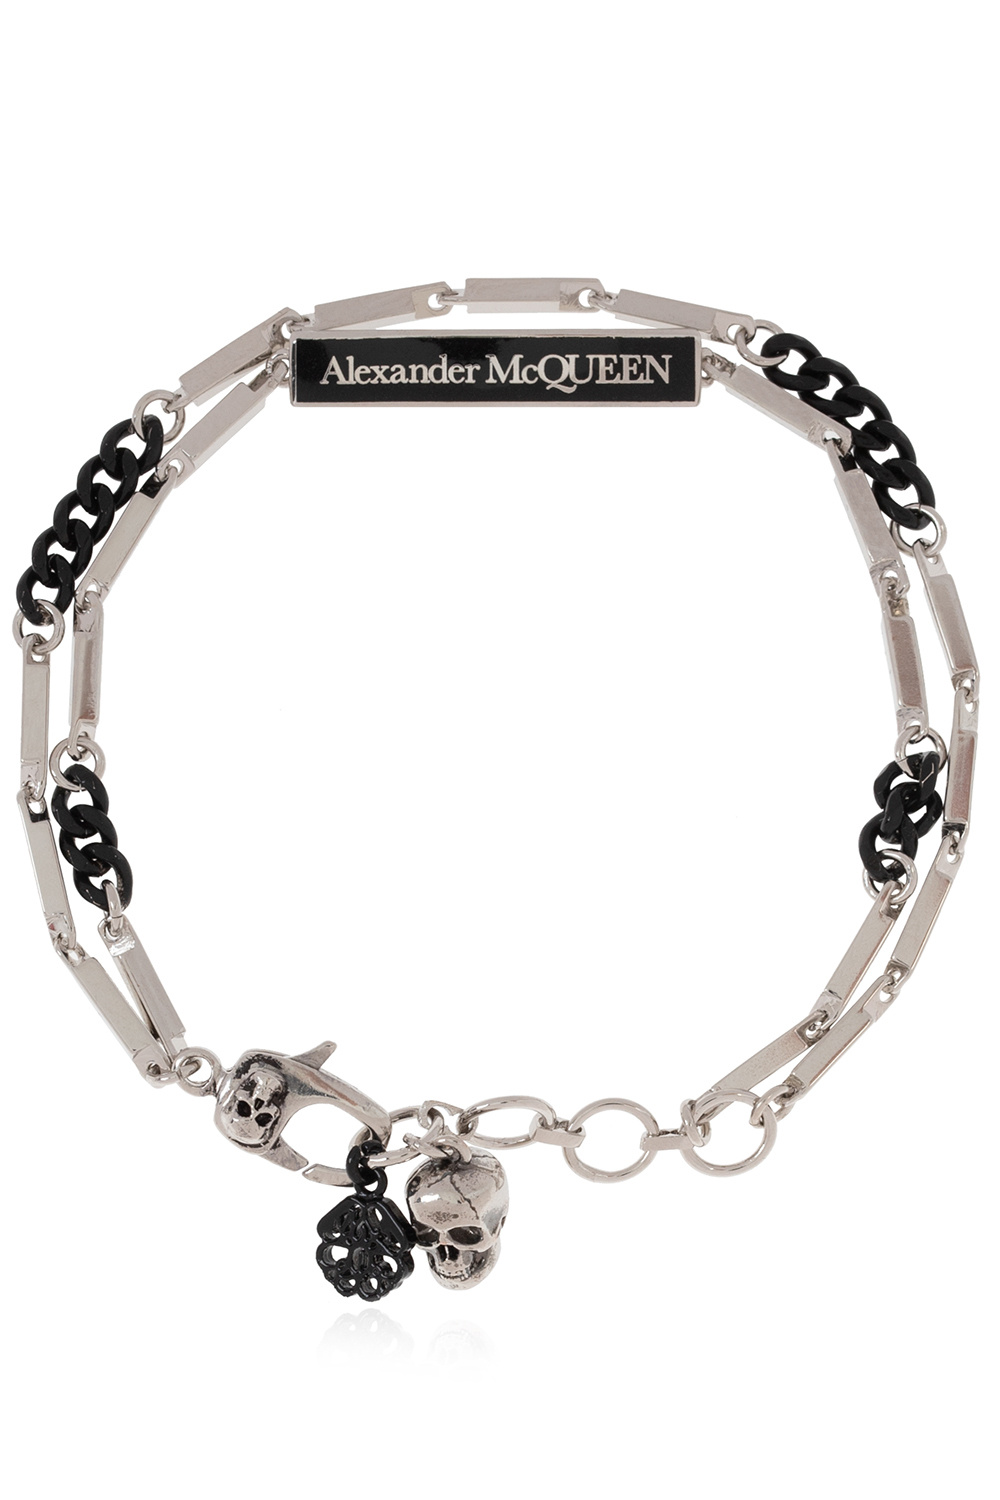 Alexander McQueen Brass bracelet with logo